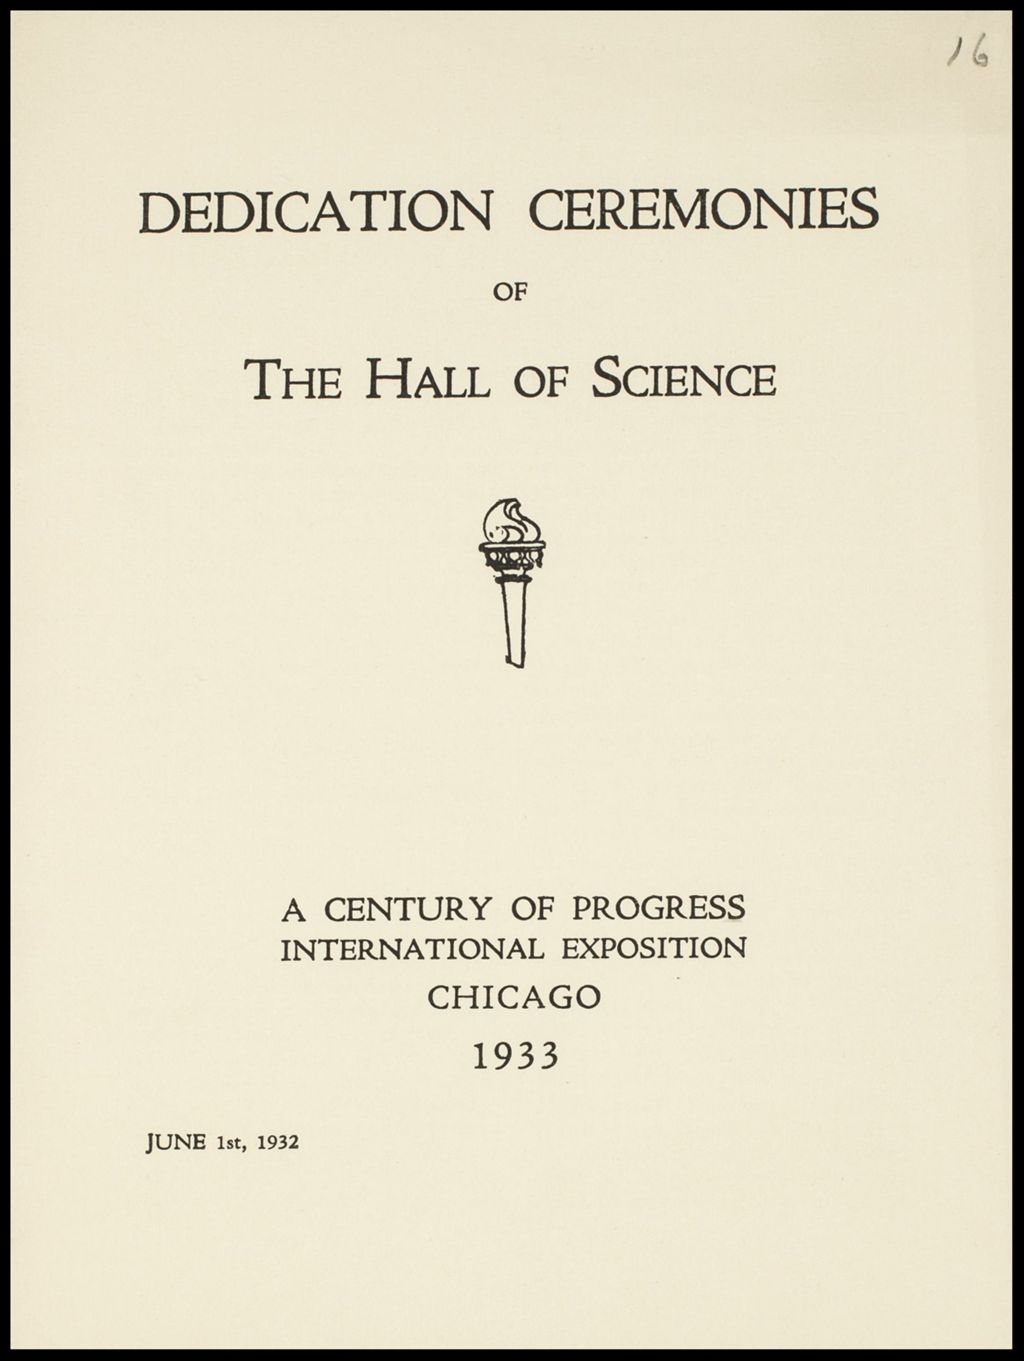 Miniature of Dedication ceremonies of The Hall of Science (Folder 16-313)